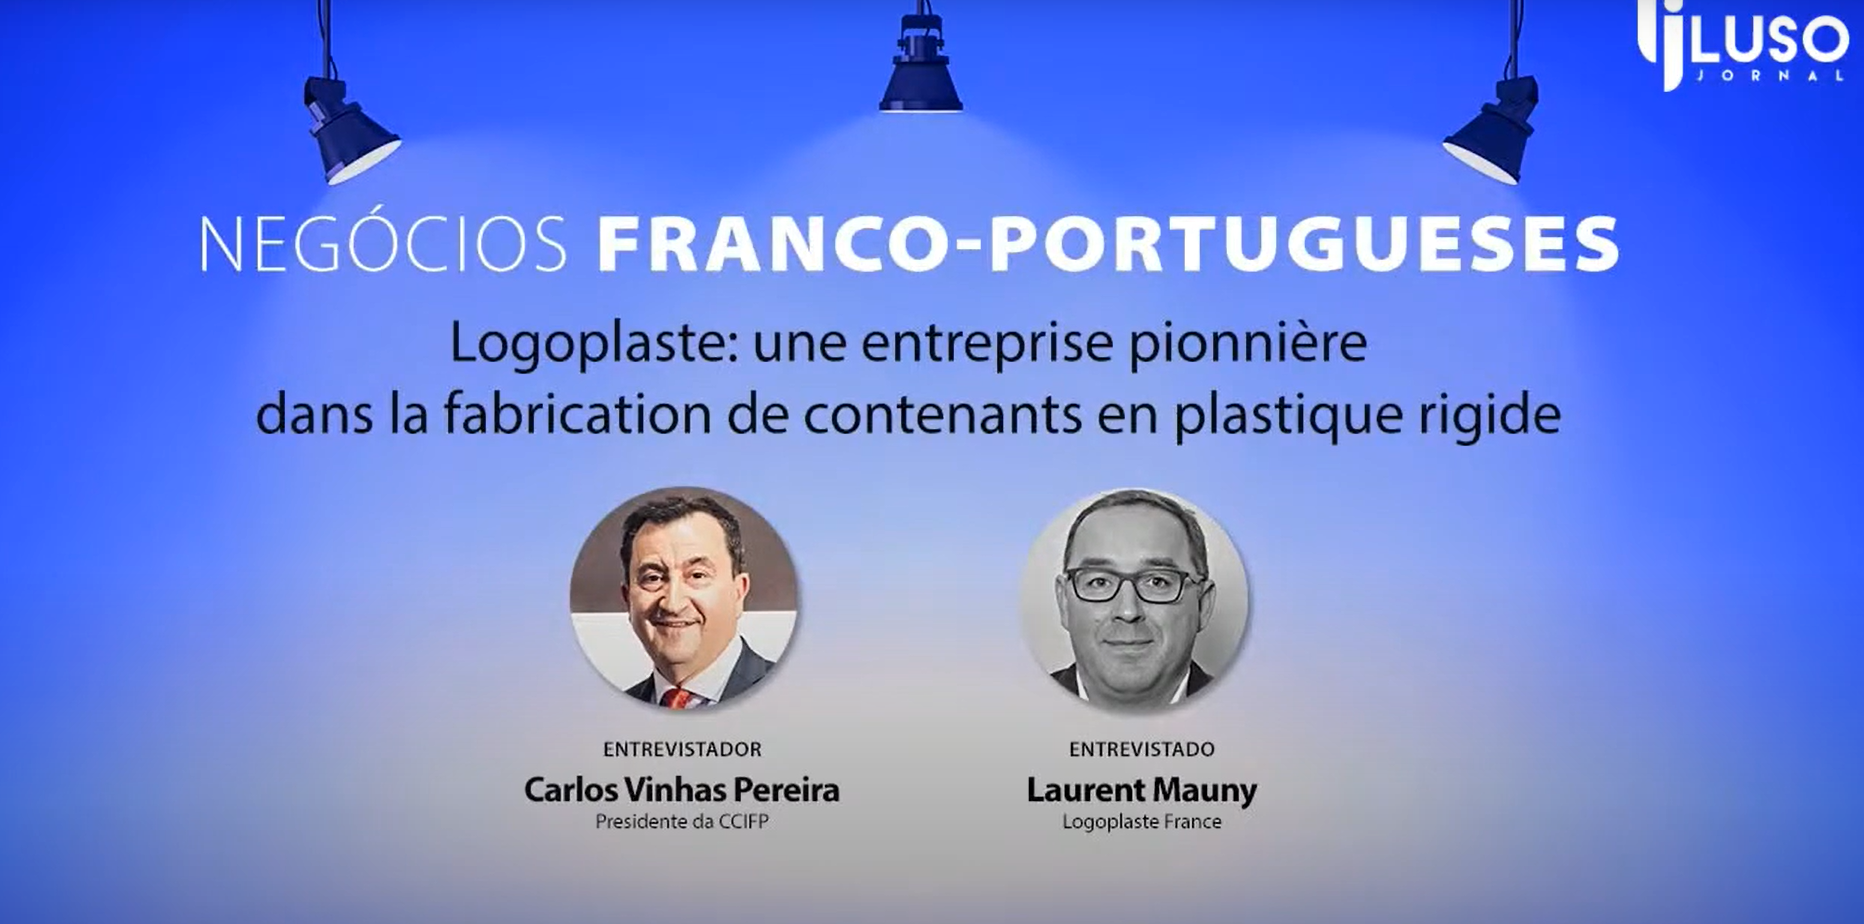 ENTREPRENARIAT FRANCO-PORTUGAIS :LAURENT MAUNY (LOGOPLASTE)